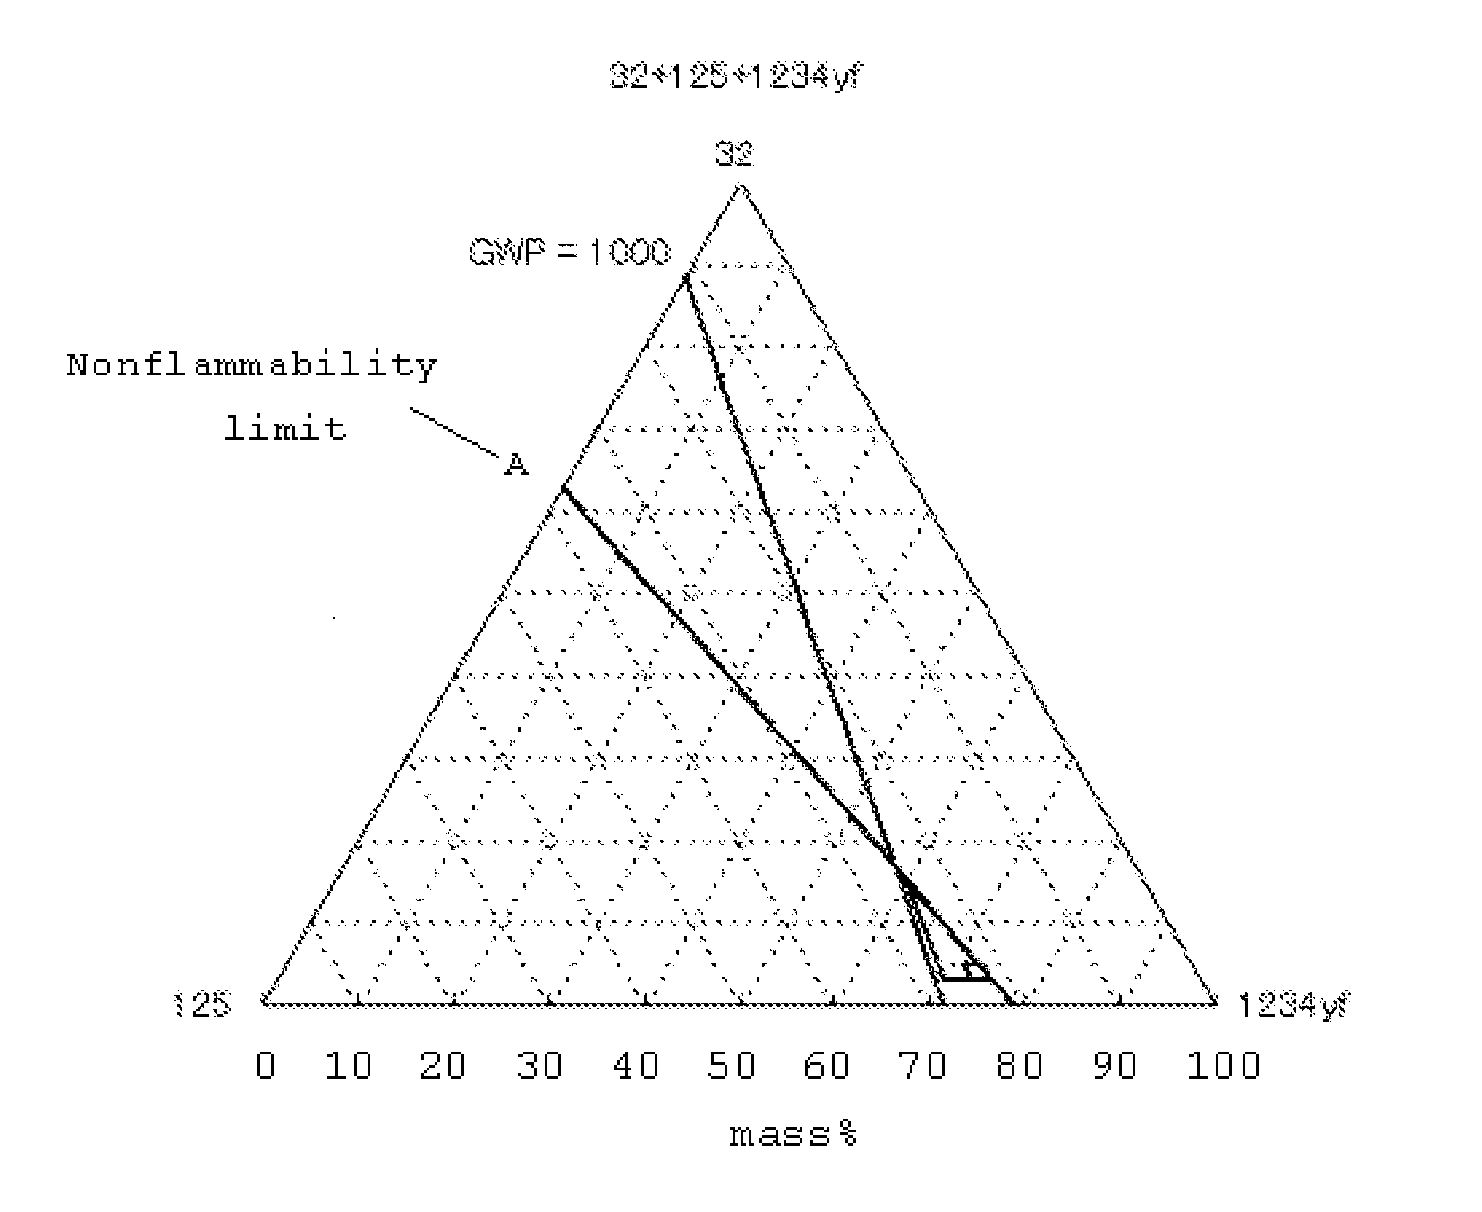 REFRIGERANT COMPOSITION COMPRISING DIFLUOROMETHANE (HFC32), PENTAFLUOROETHANE (HFC125) AND 2, 3, 3, 3-TETRAFLUOROPROPENE (HFO1234yf)